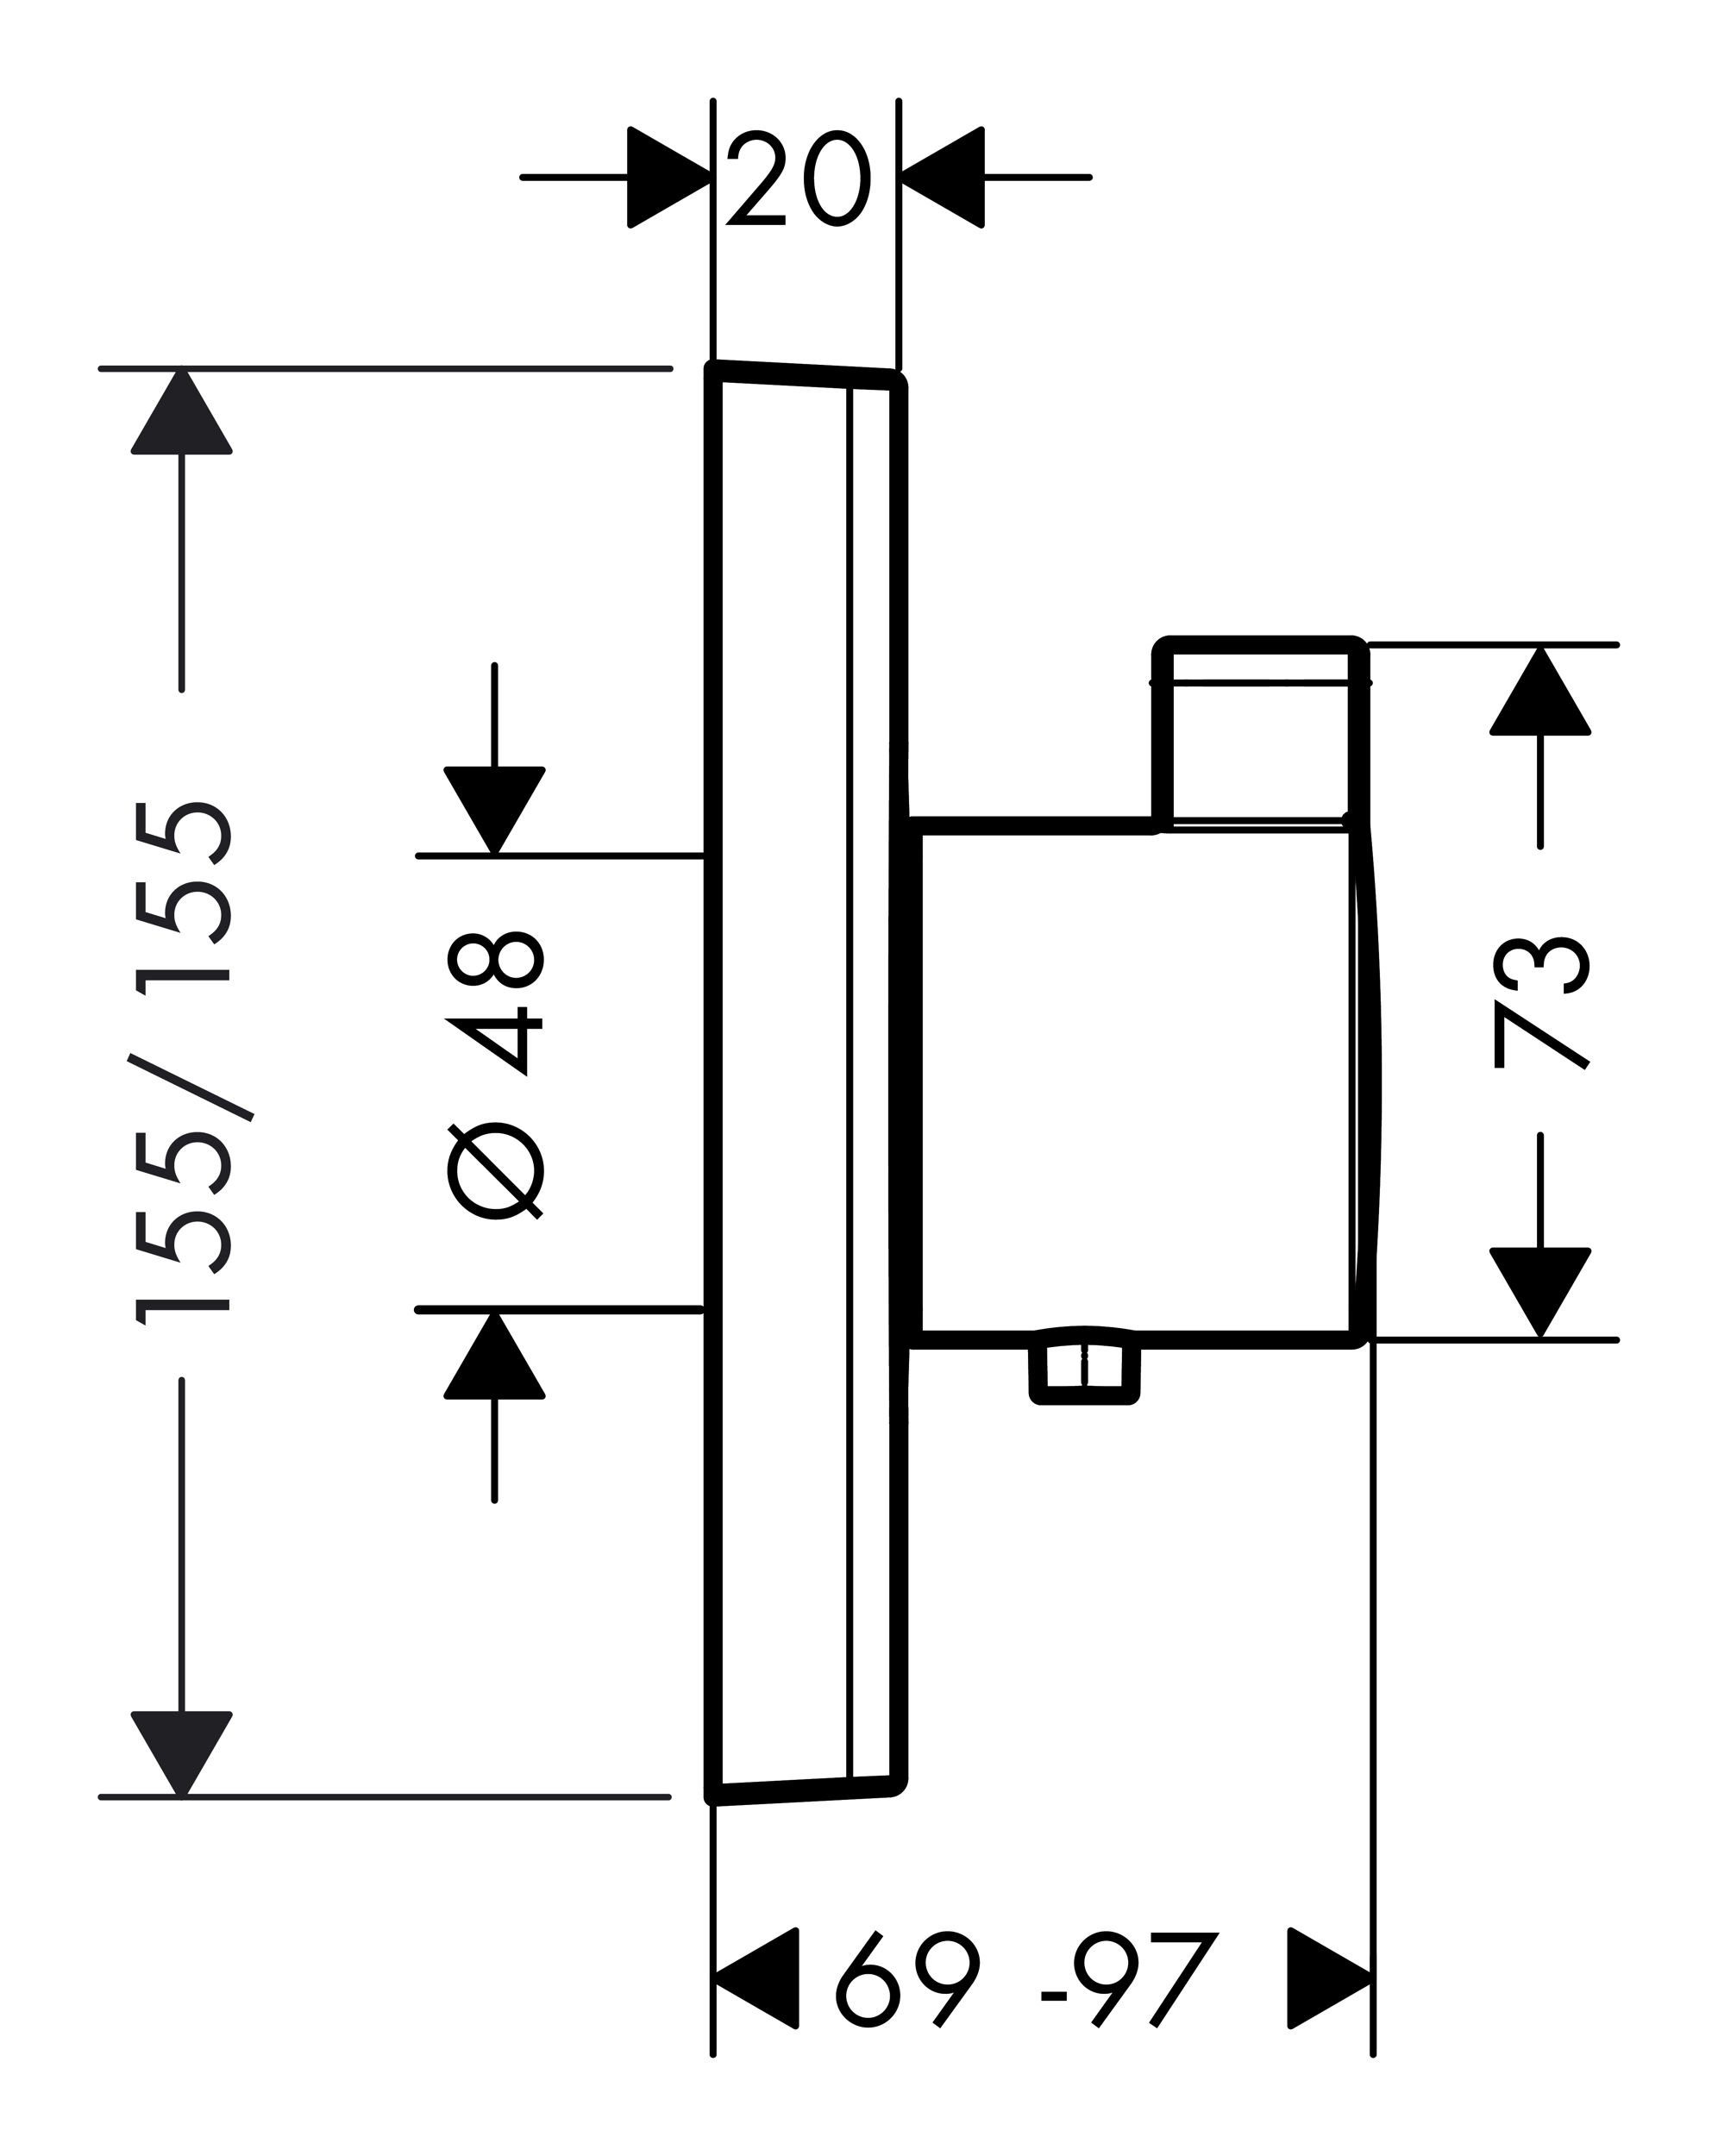 Thermostat Unterputz - hansgrohe Chrom HighFlow ShowerSelect Unterputzarmatur